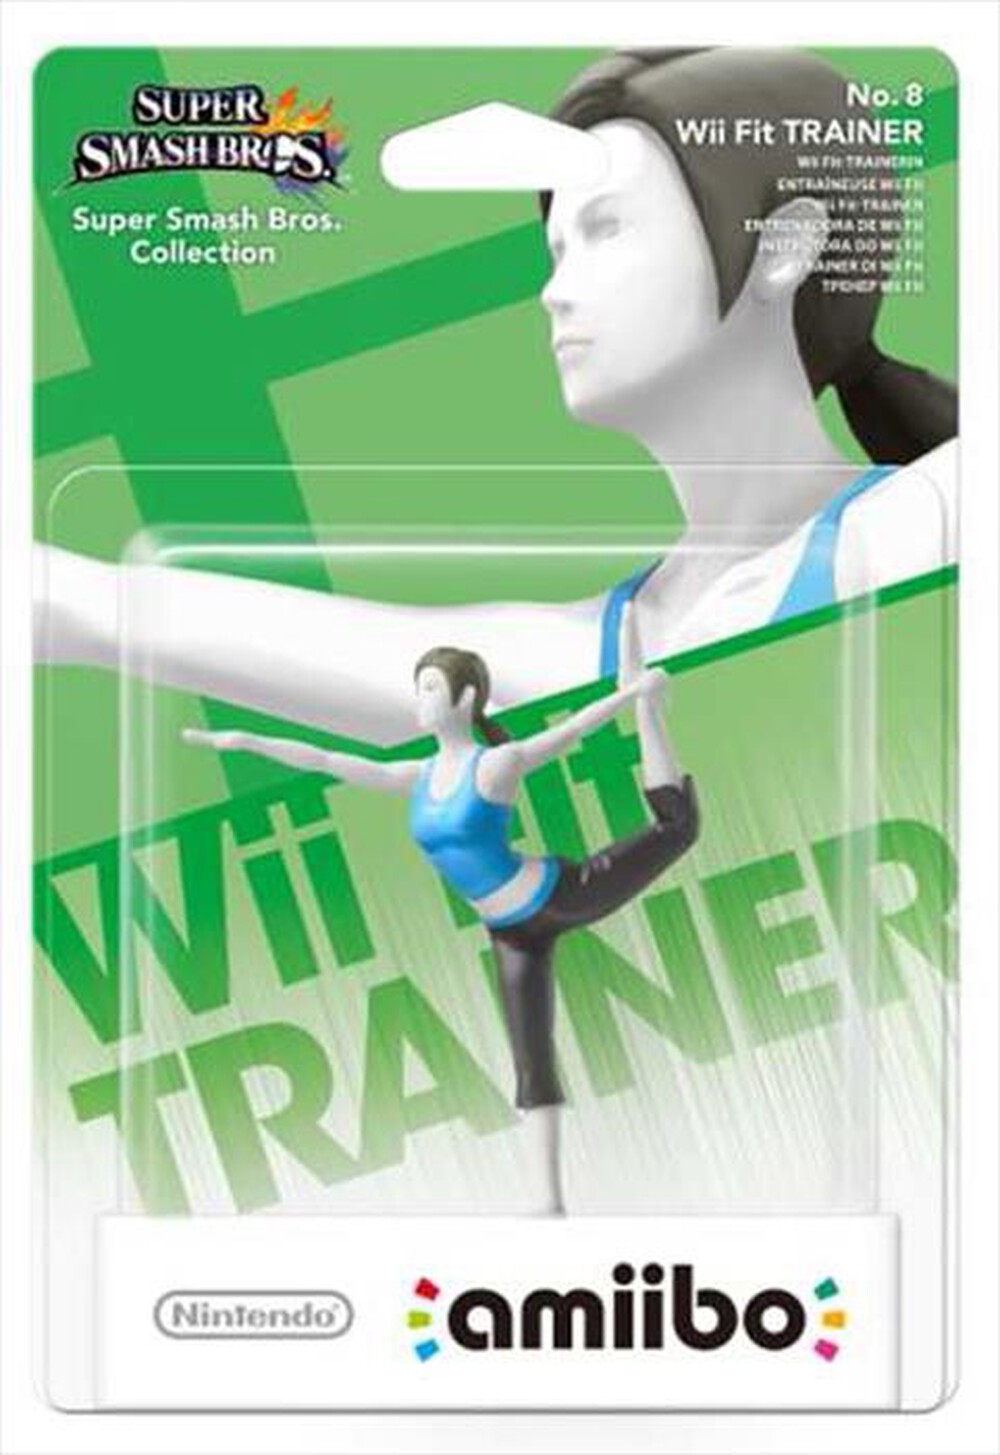 "NINTENDO - Amiibo - Wii Fit Trainer"